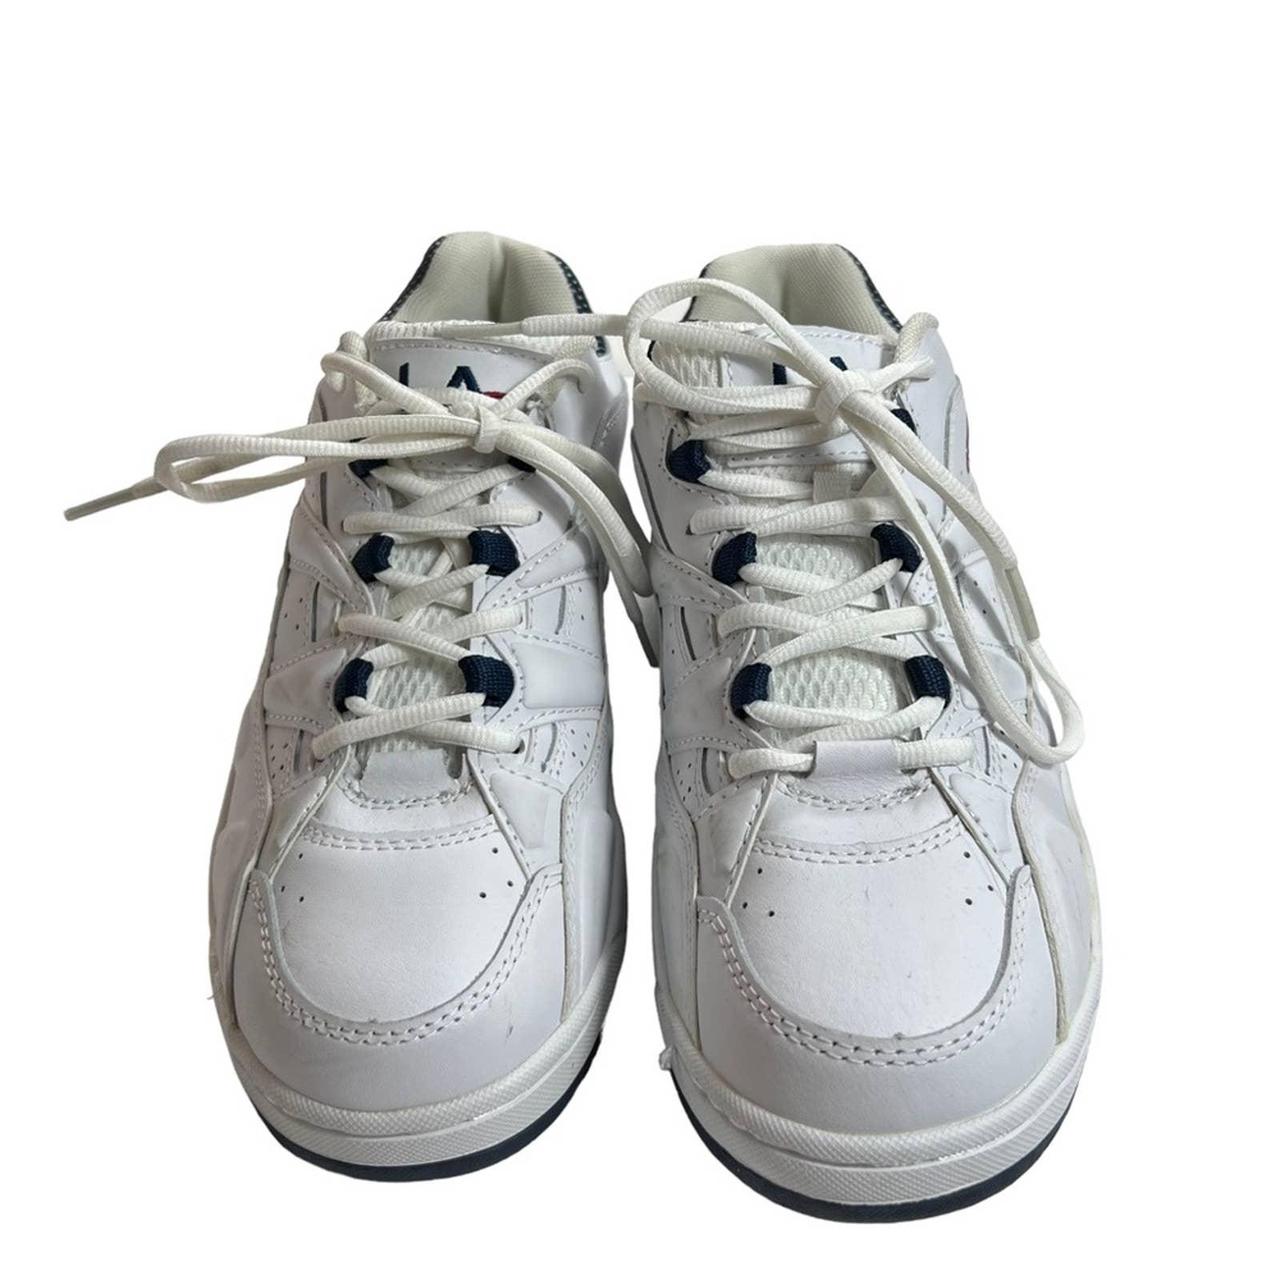 Silver Metallic L.A. Gear workout sneakers / tennis - Depop